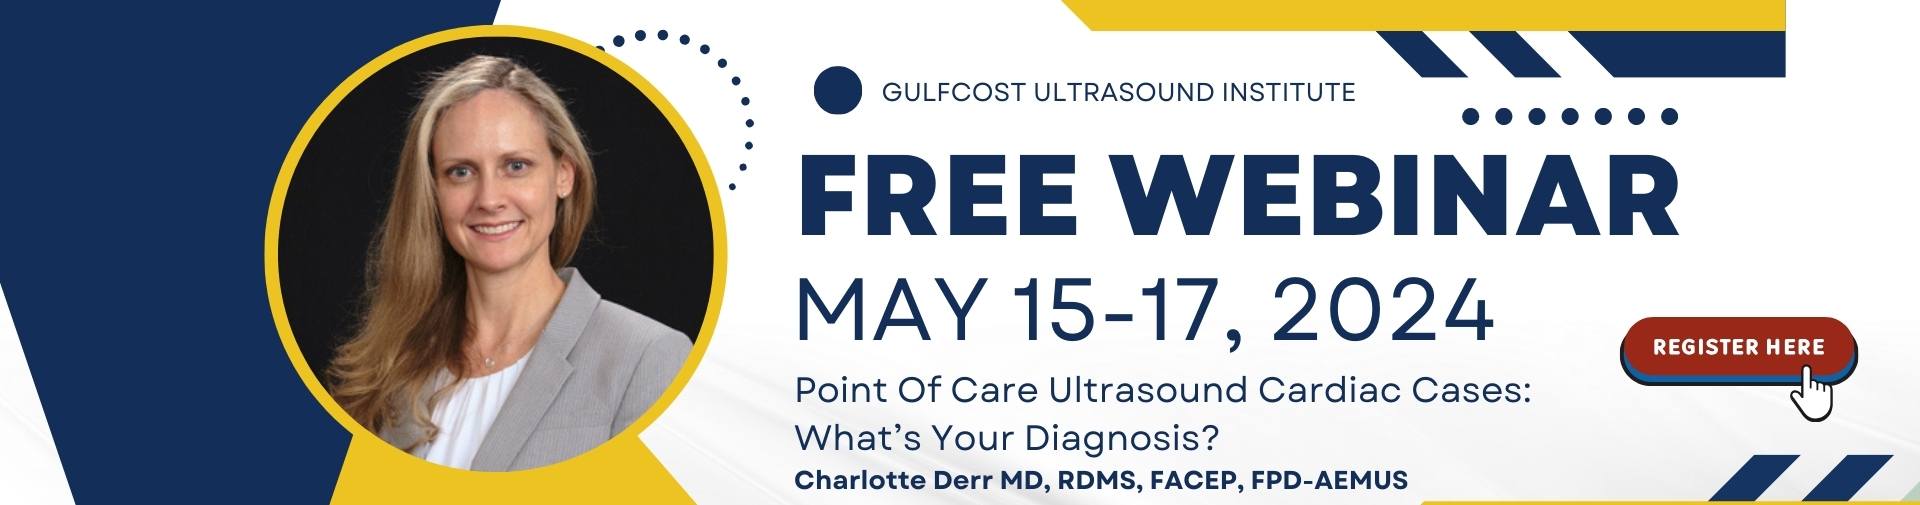 Gulfcoast Ultrasound Institute Banner Images